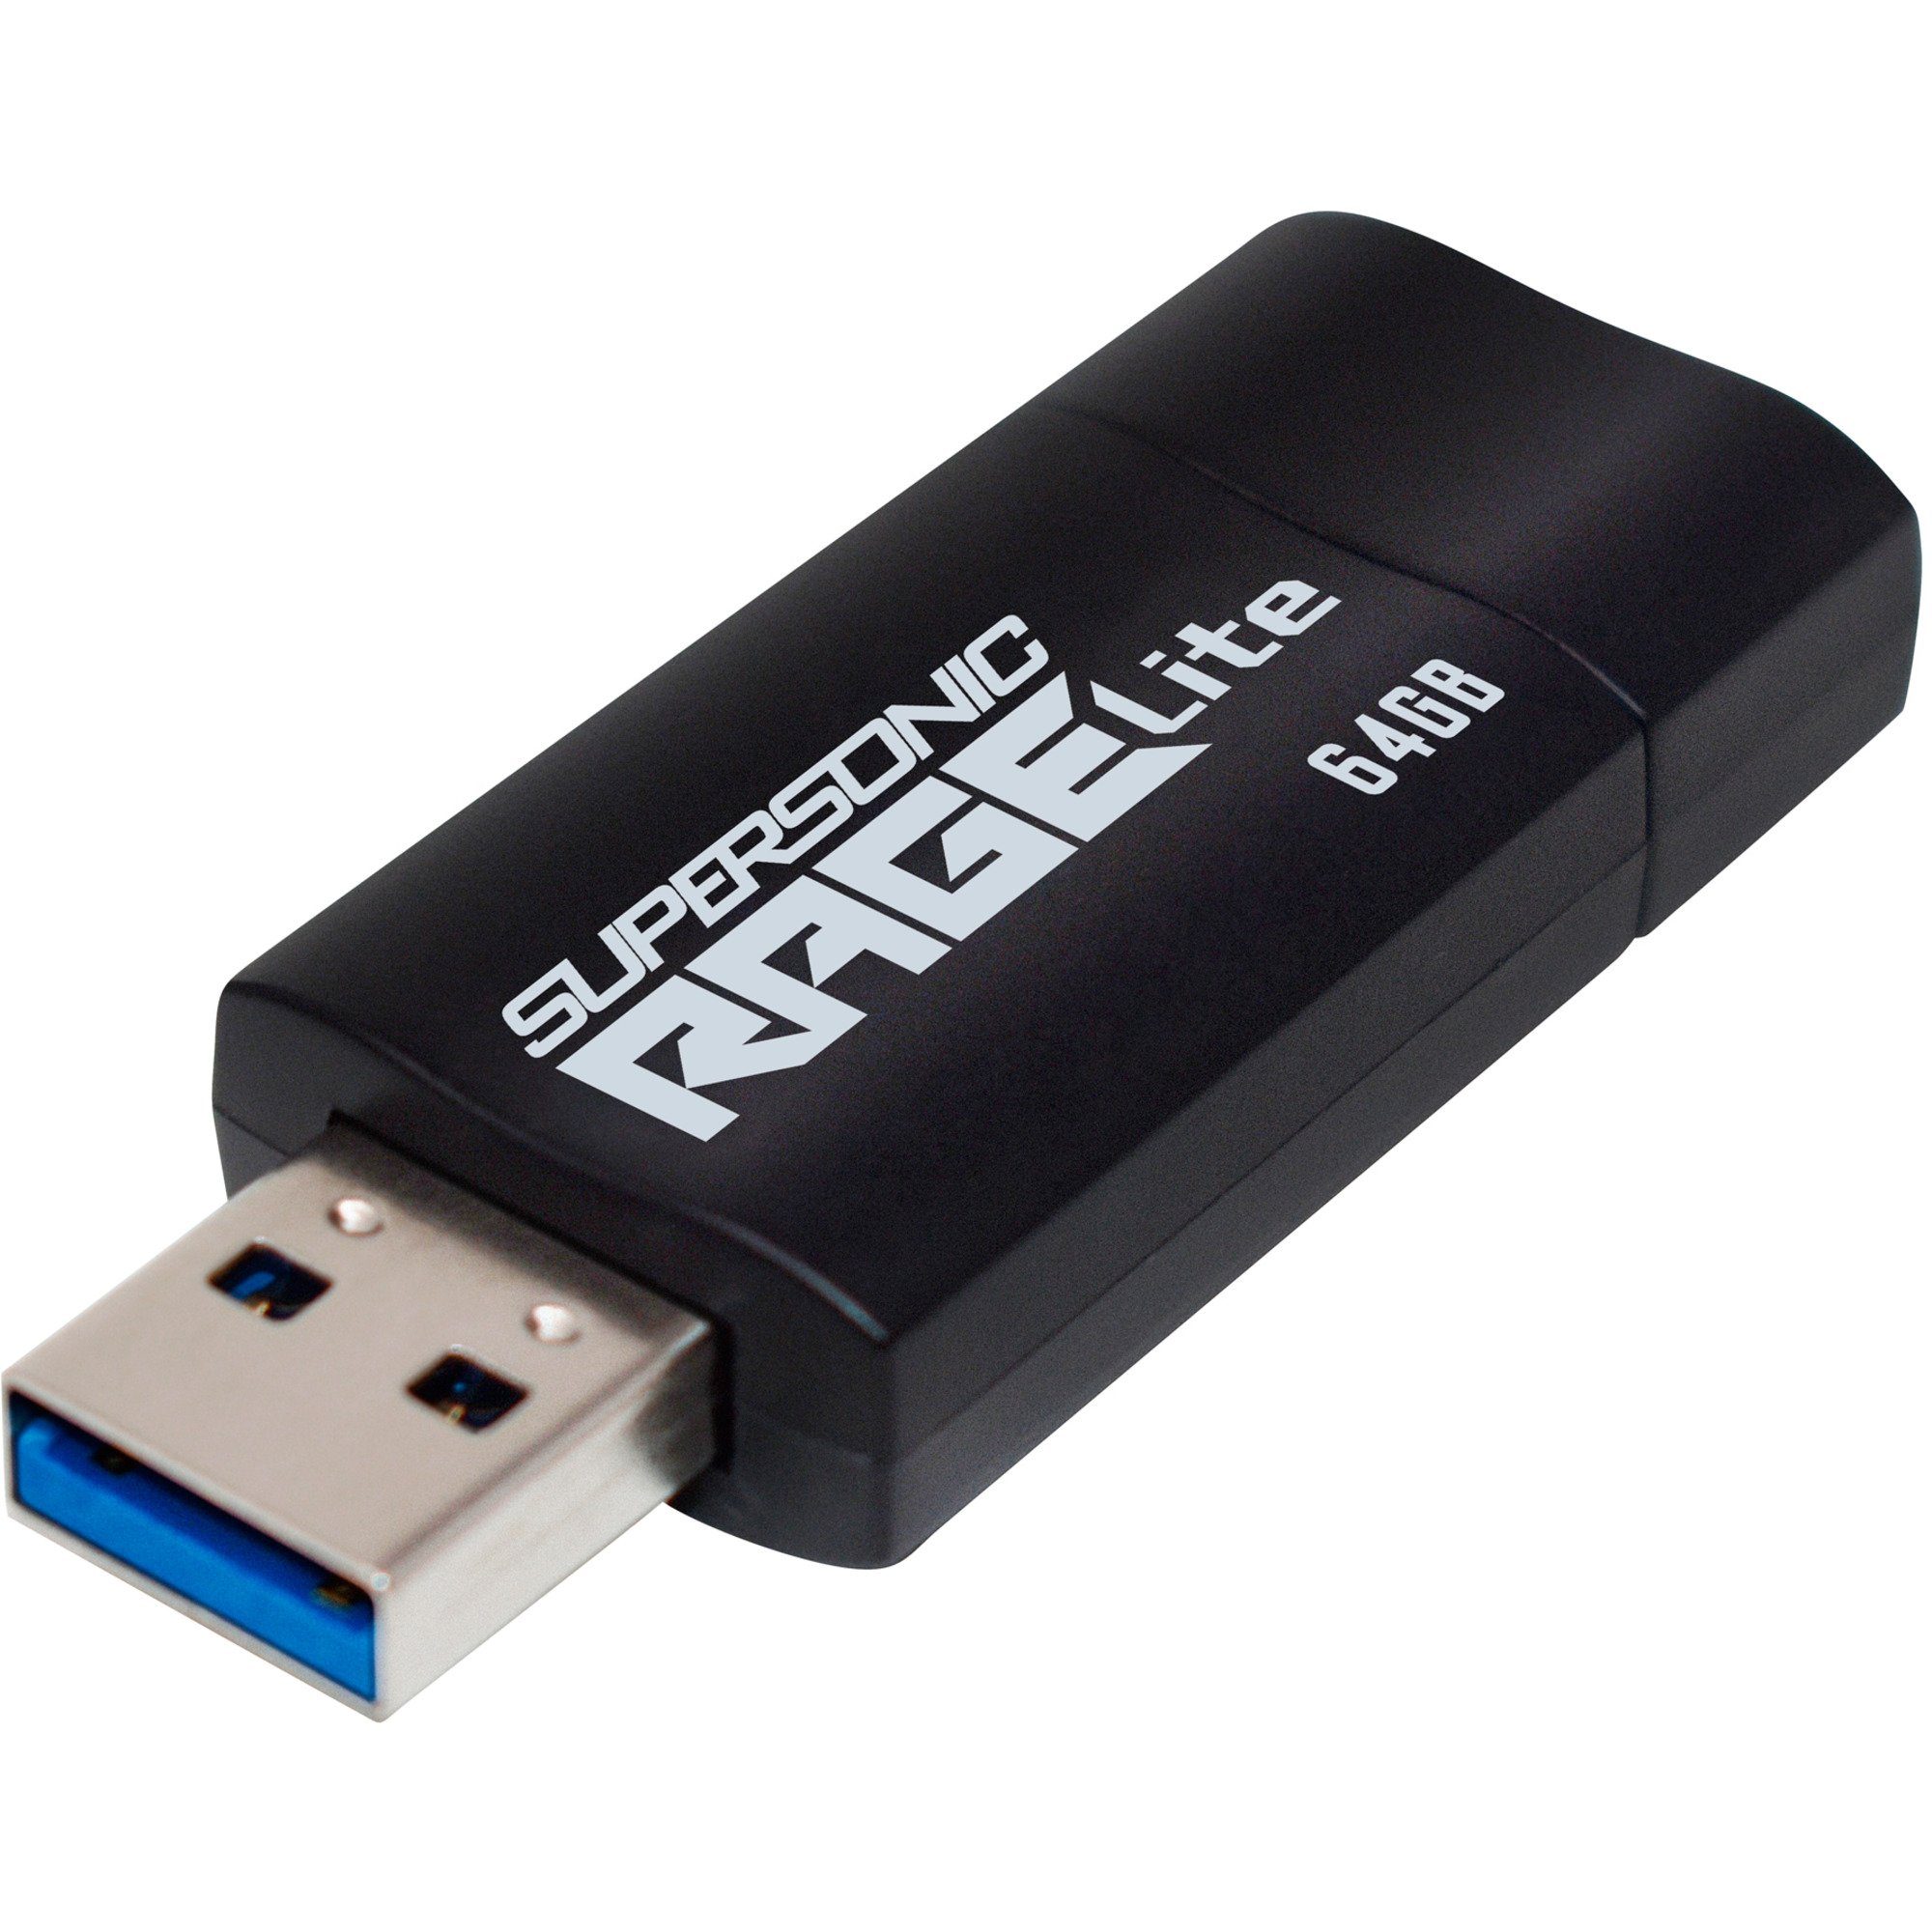 Patriot Supersonic Rage Lite 64 GB USB-Stick